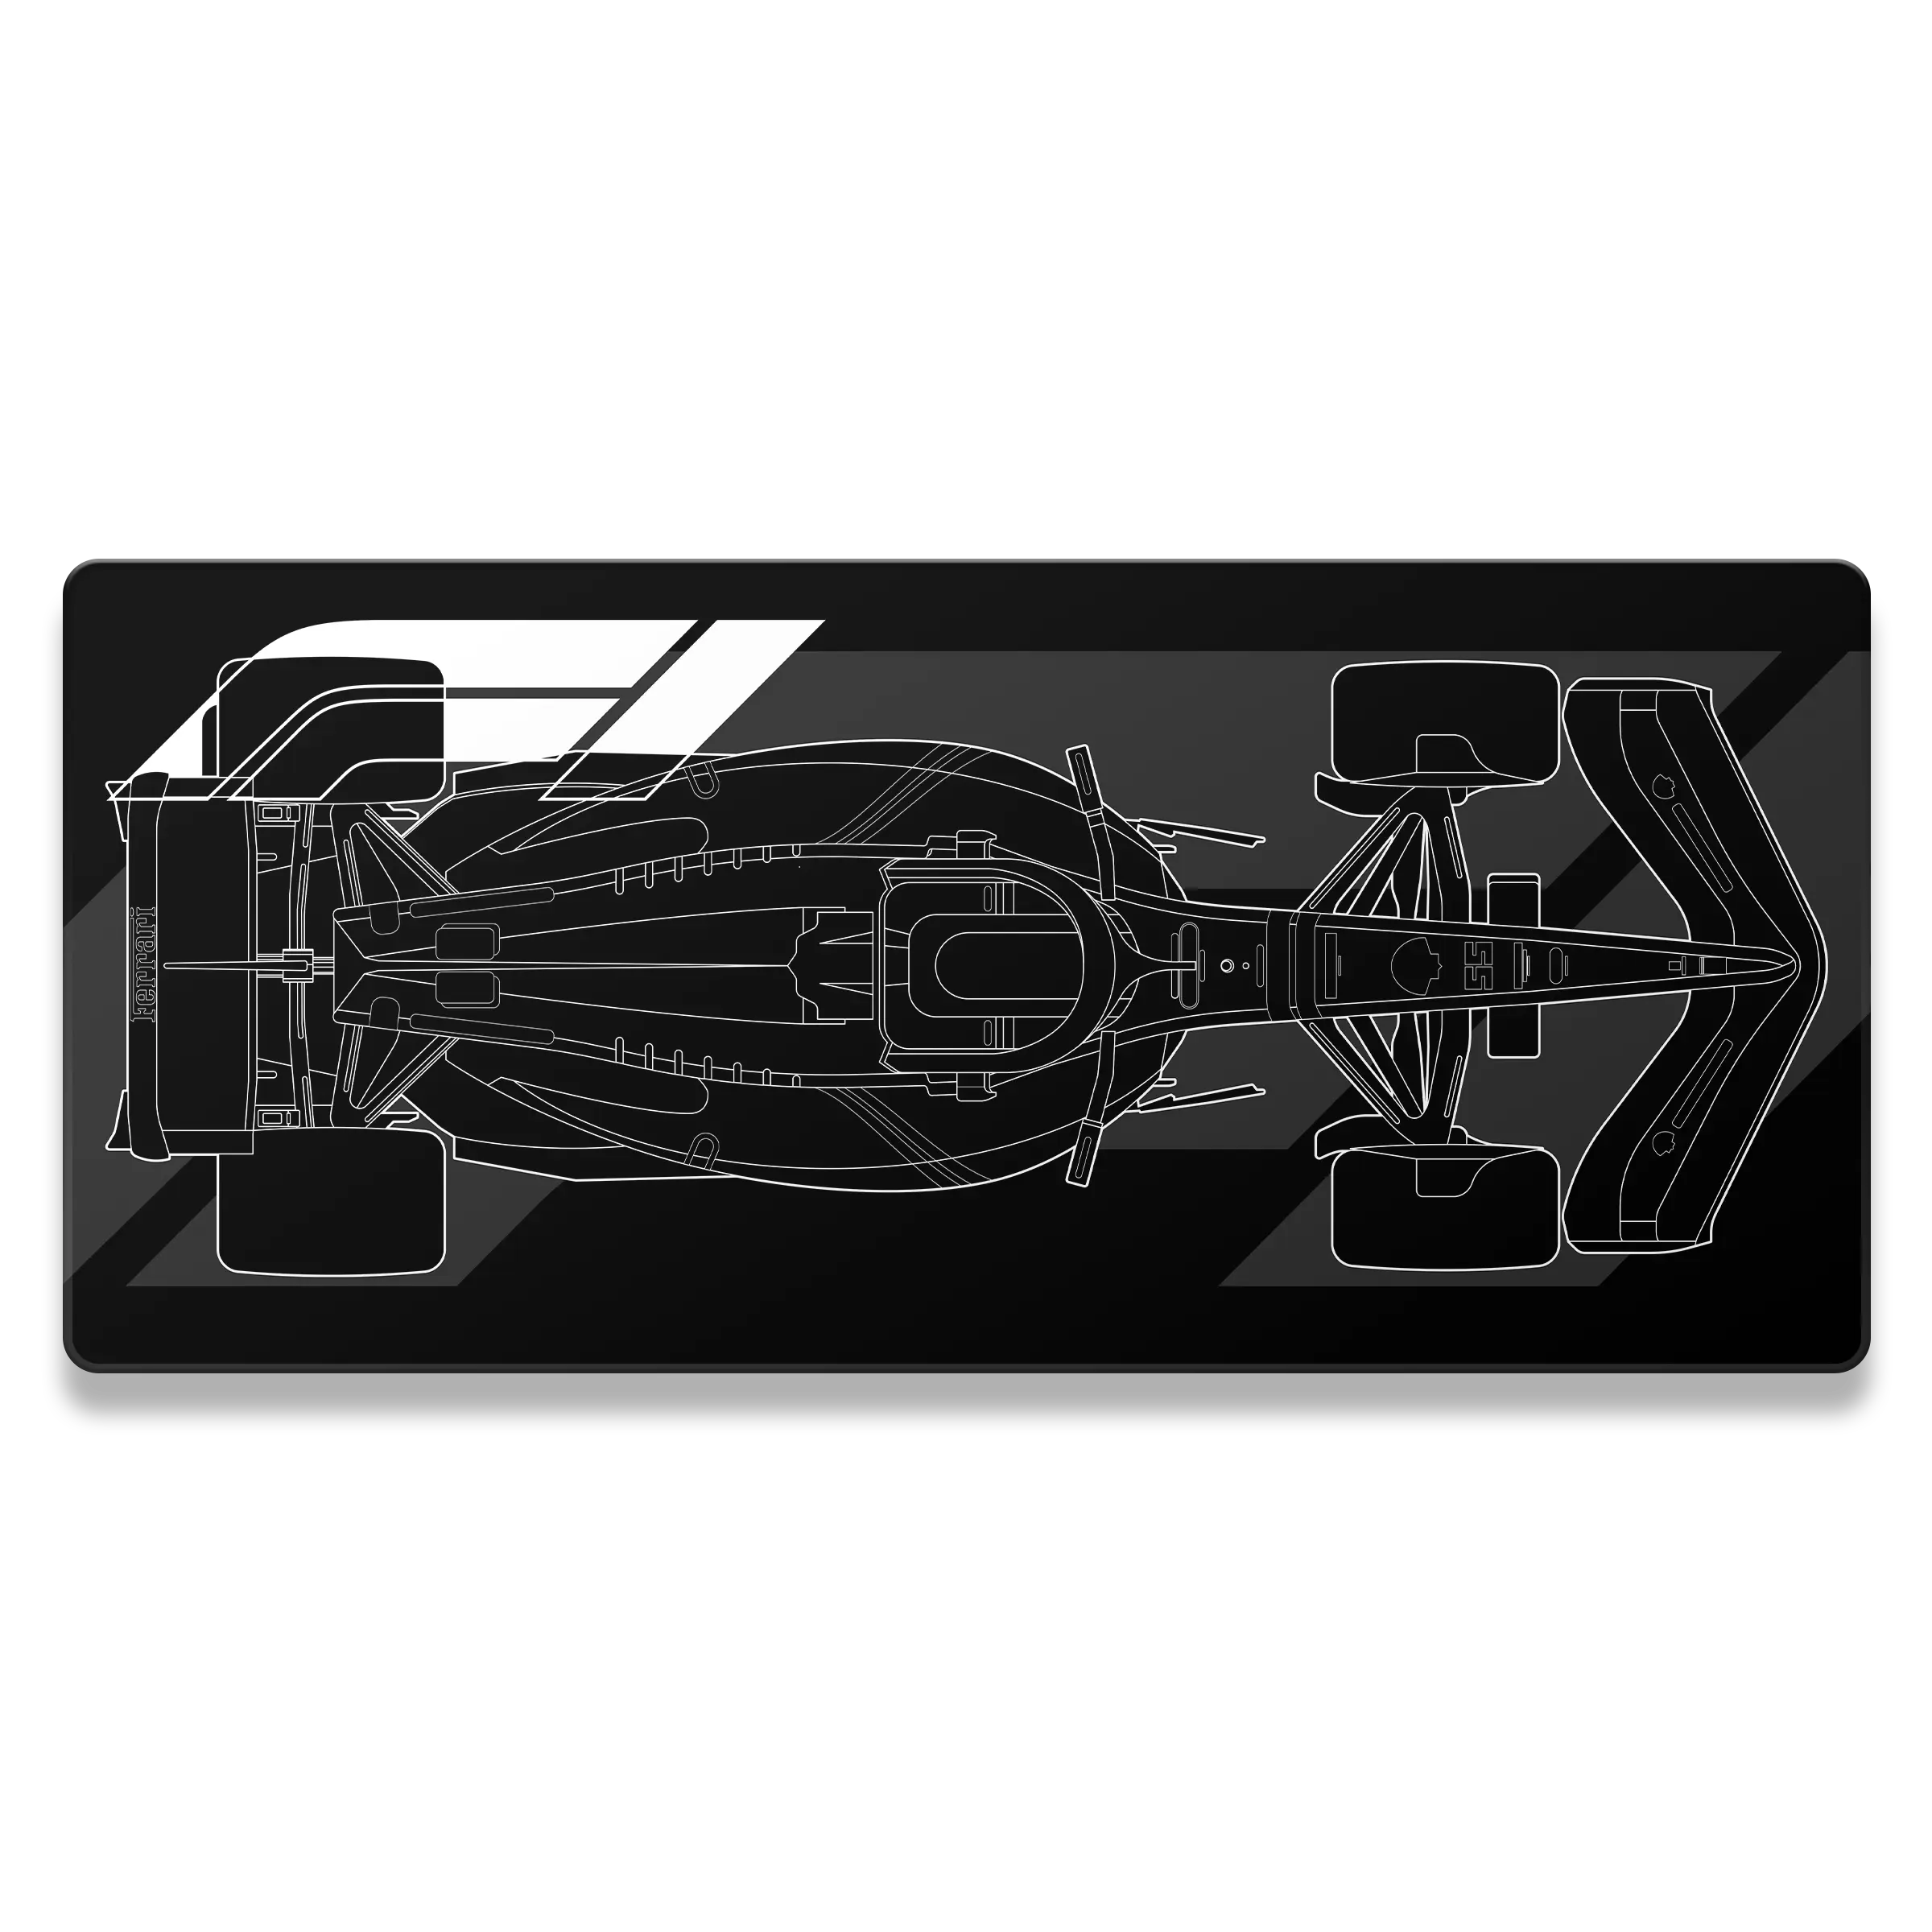 F1 Car Mousepad